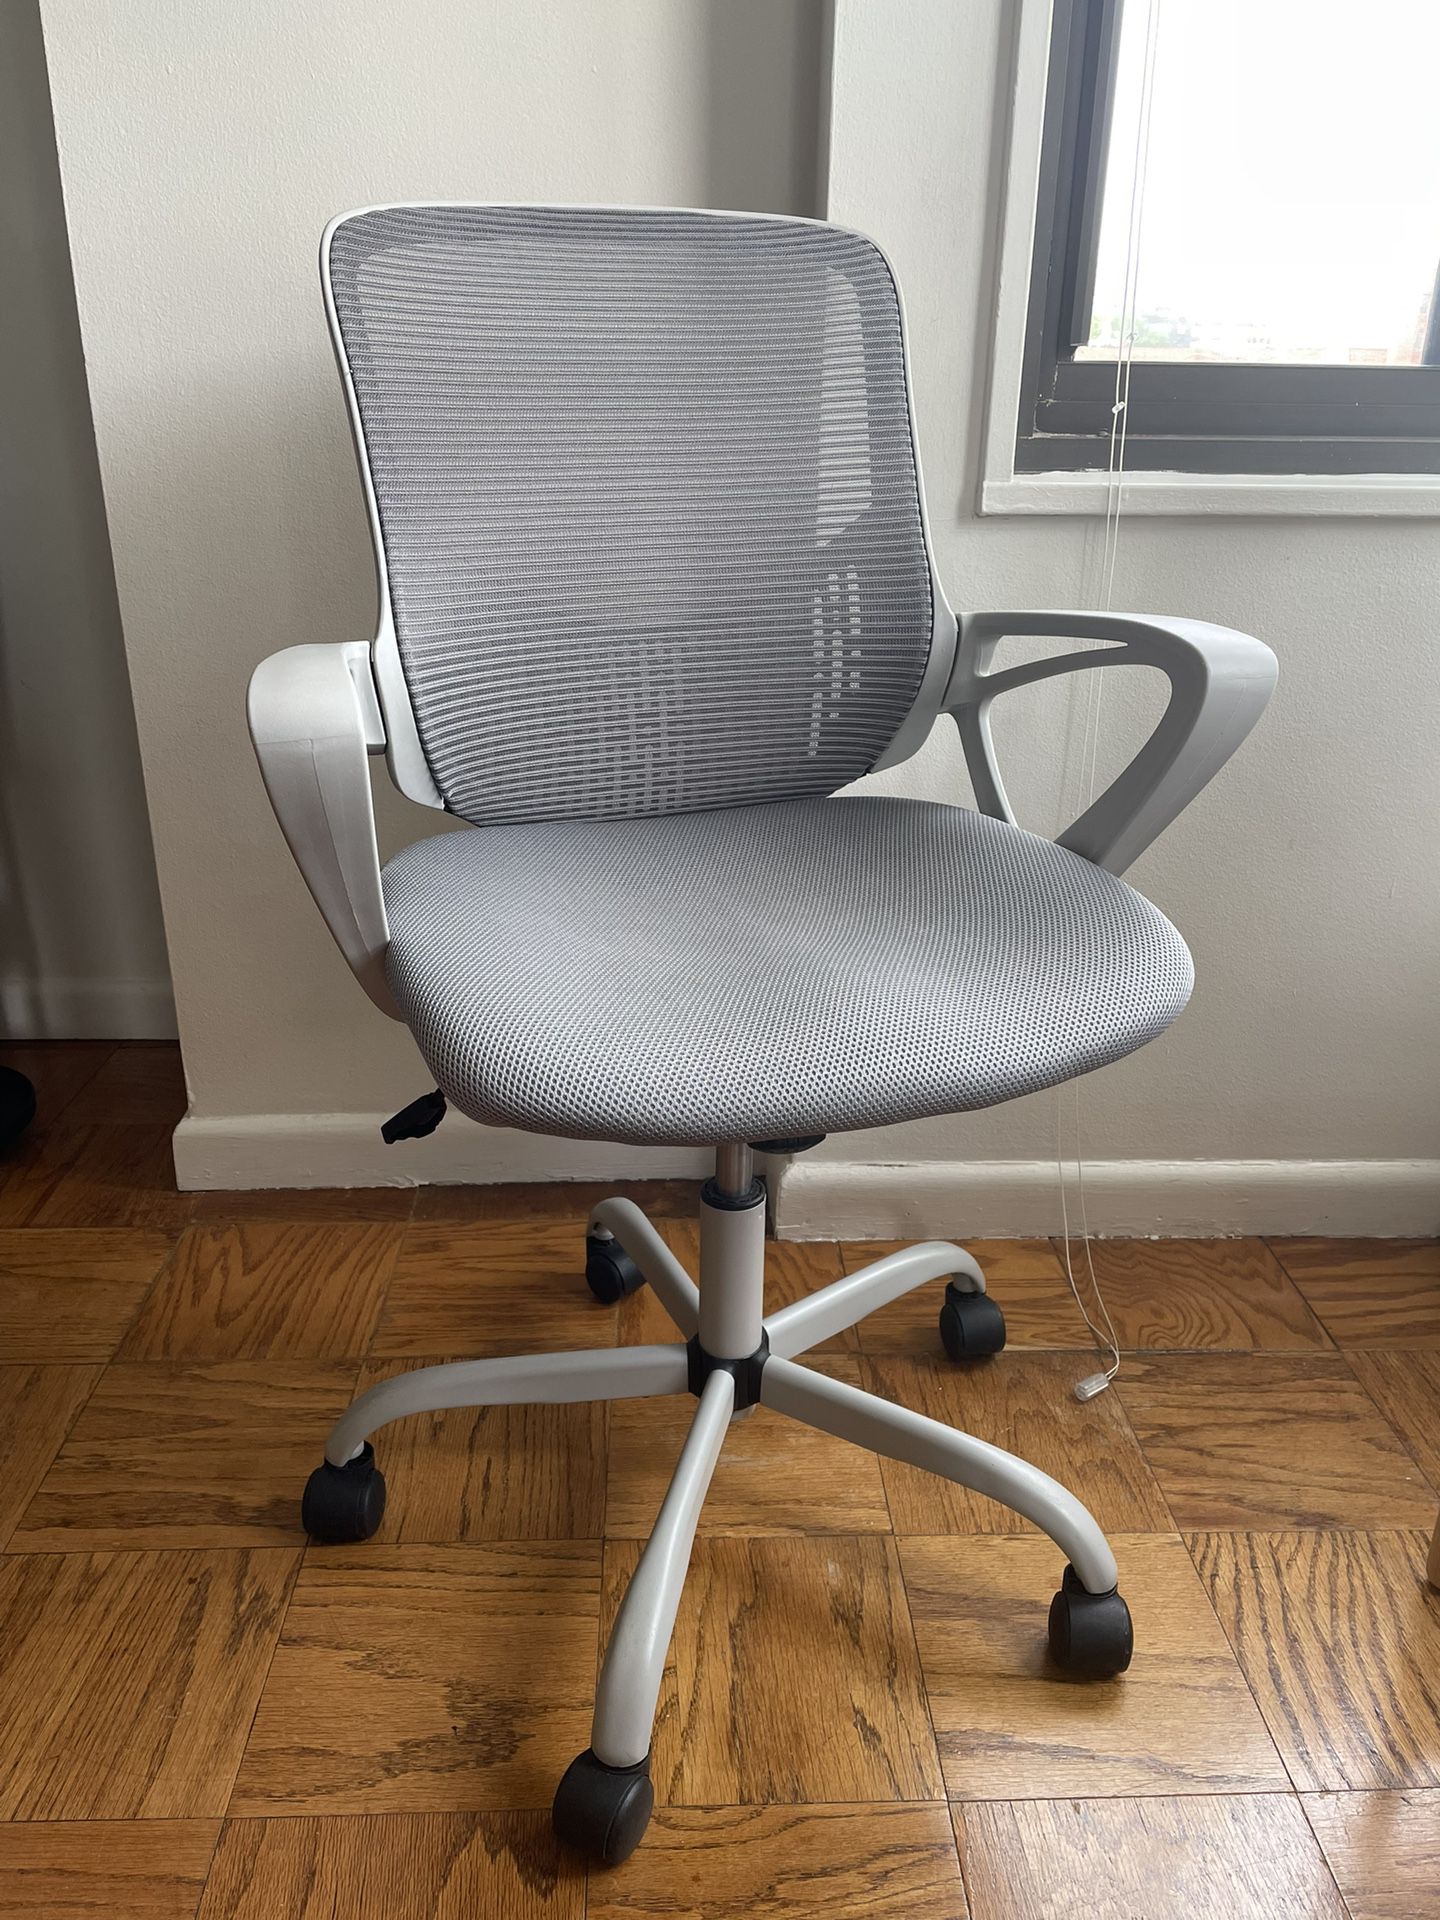 Gray Ergonomic Desk Chair 